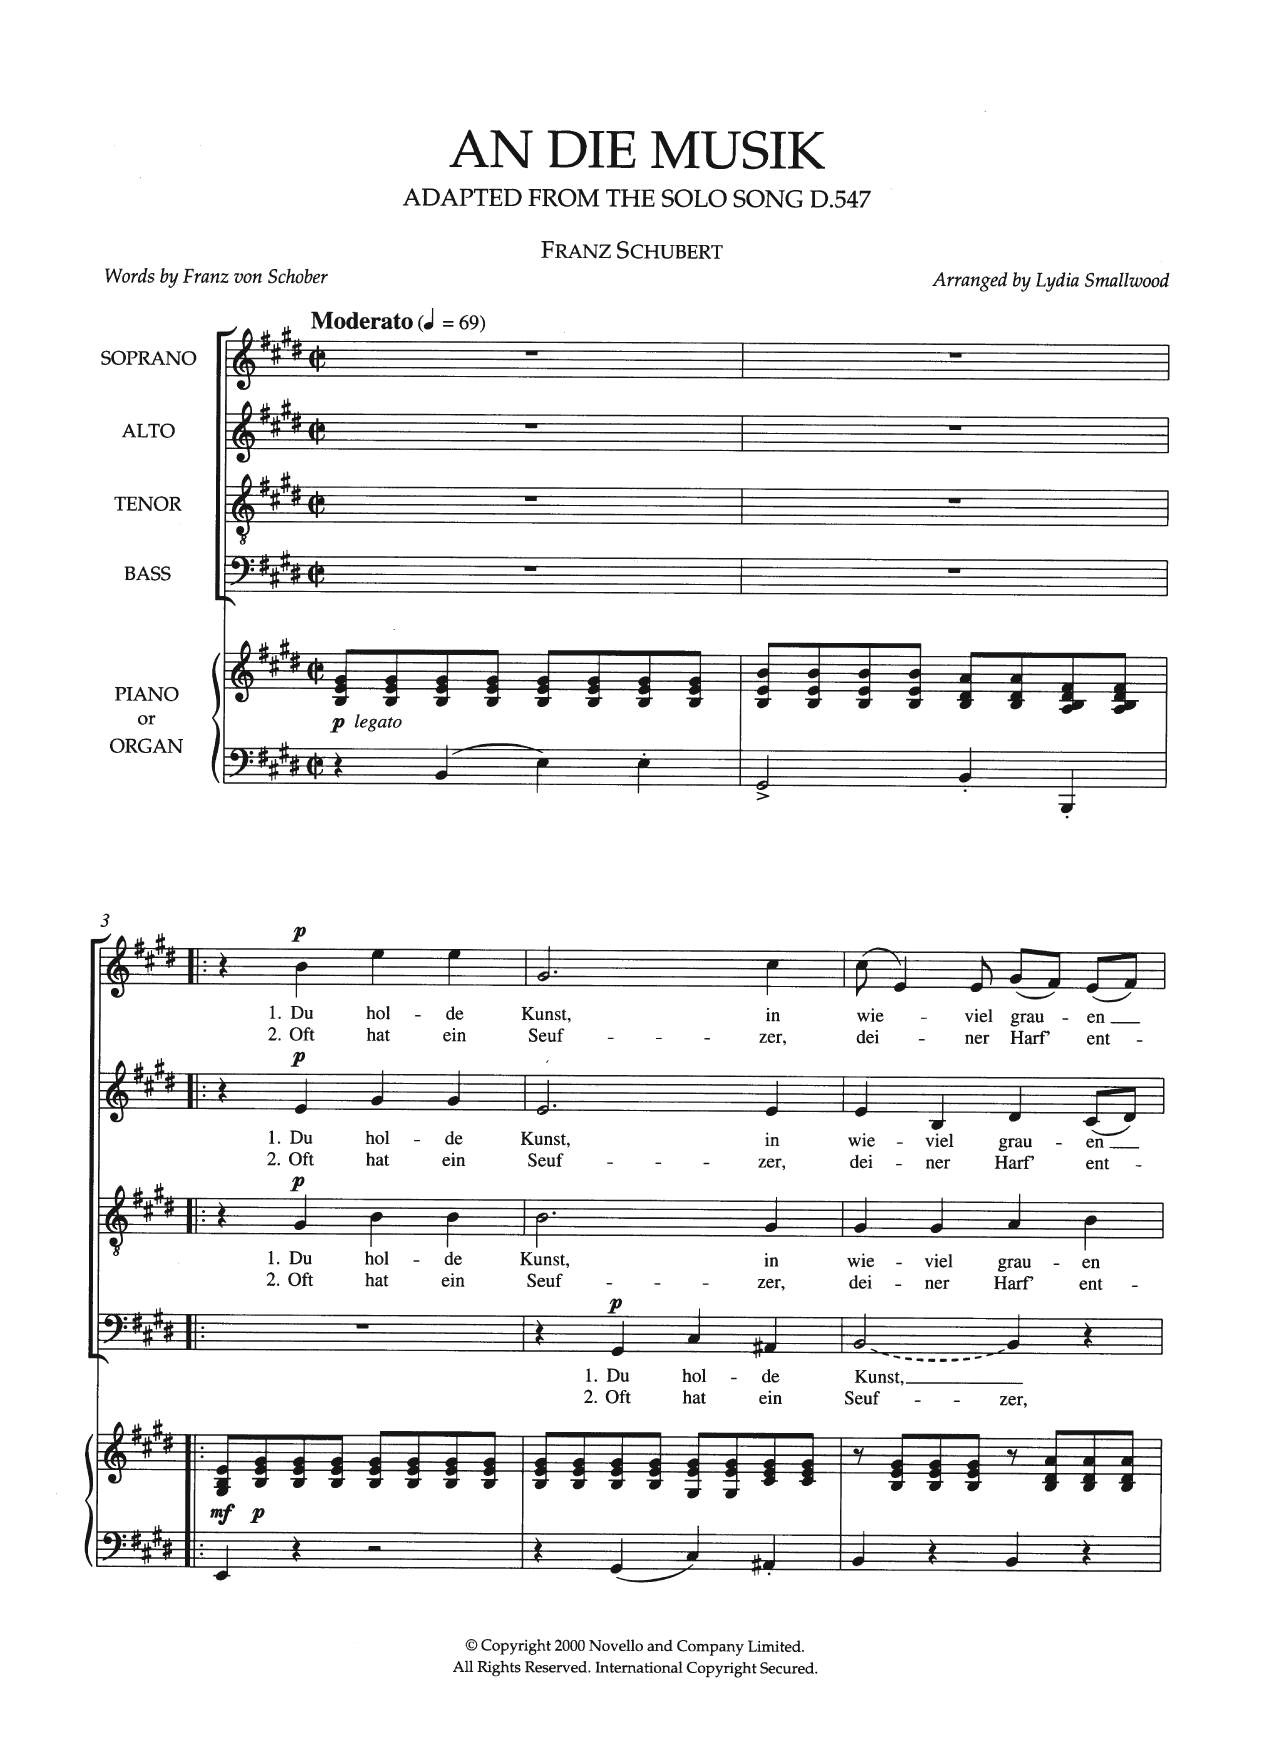 Franz Schubert An Die Musik (arr. Lydia Smallwood) Sheet Music Notes & Chords for Choir - Download or Print PDF